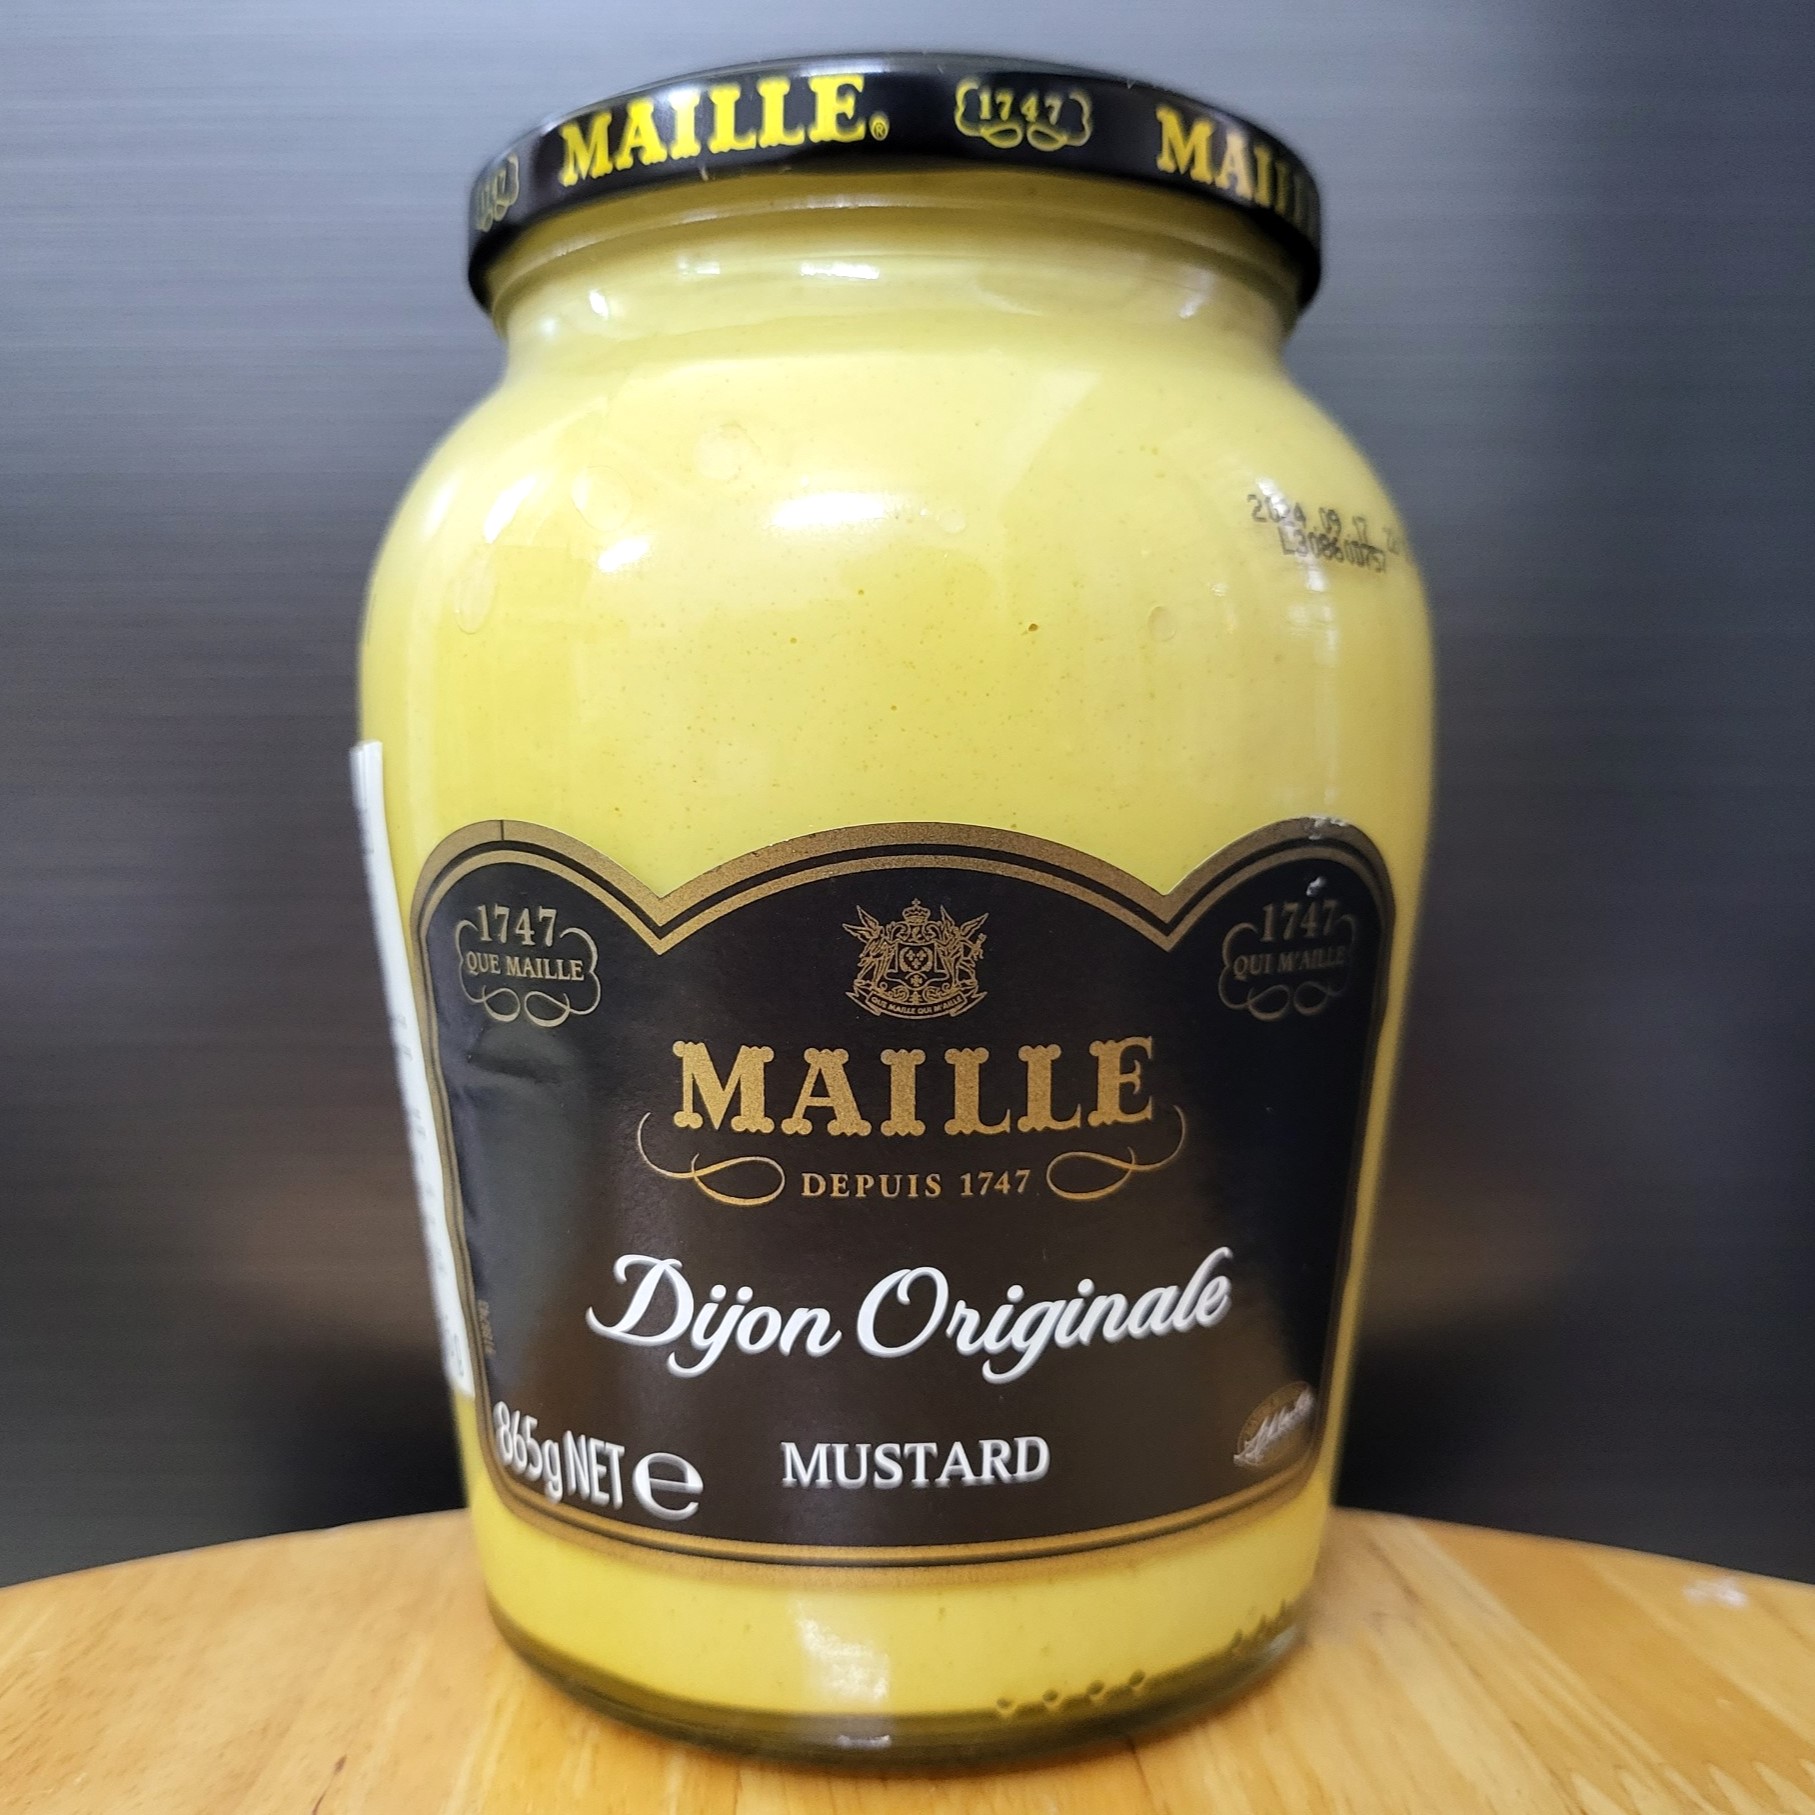 MAILLE - LỌ MỊN 865g MÙ TẠT DIJON PHÁP Dijon Originale Mustard